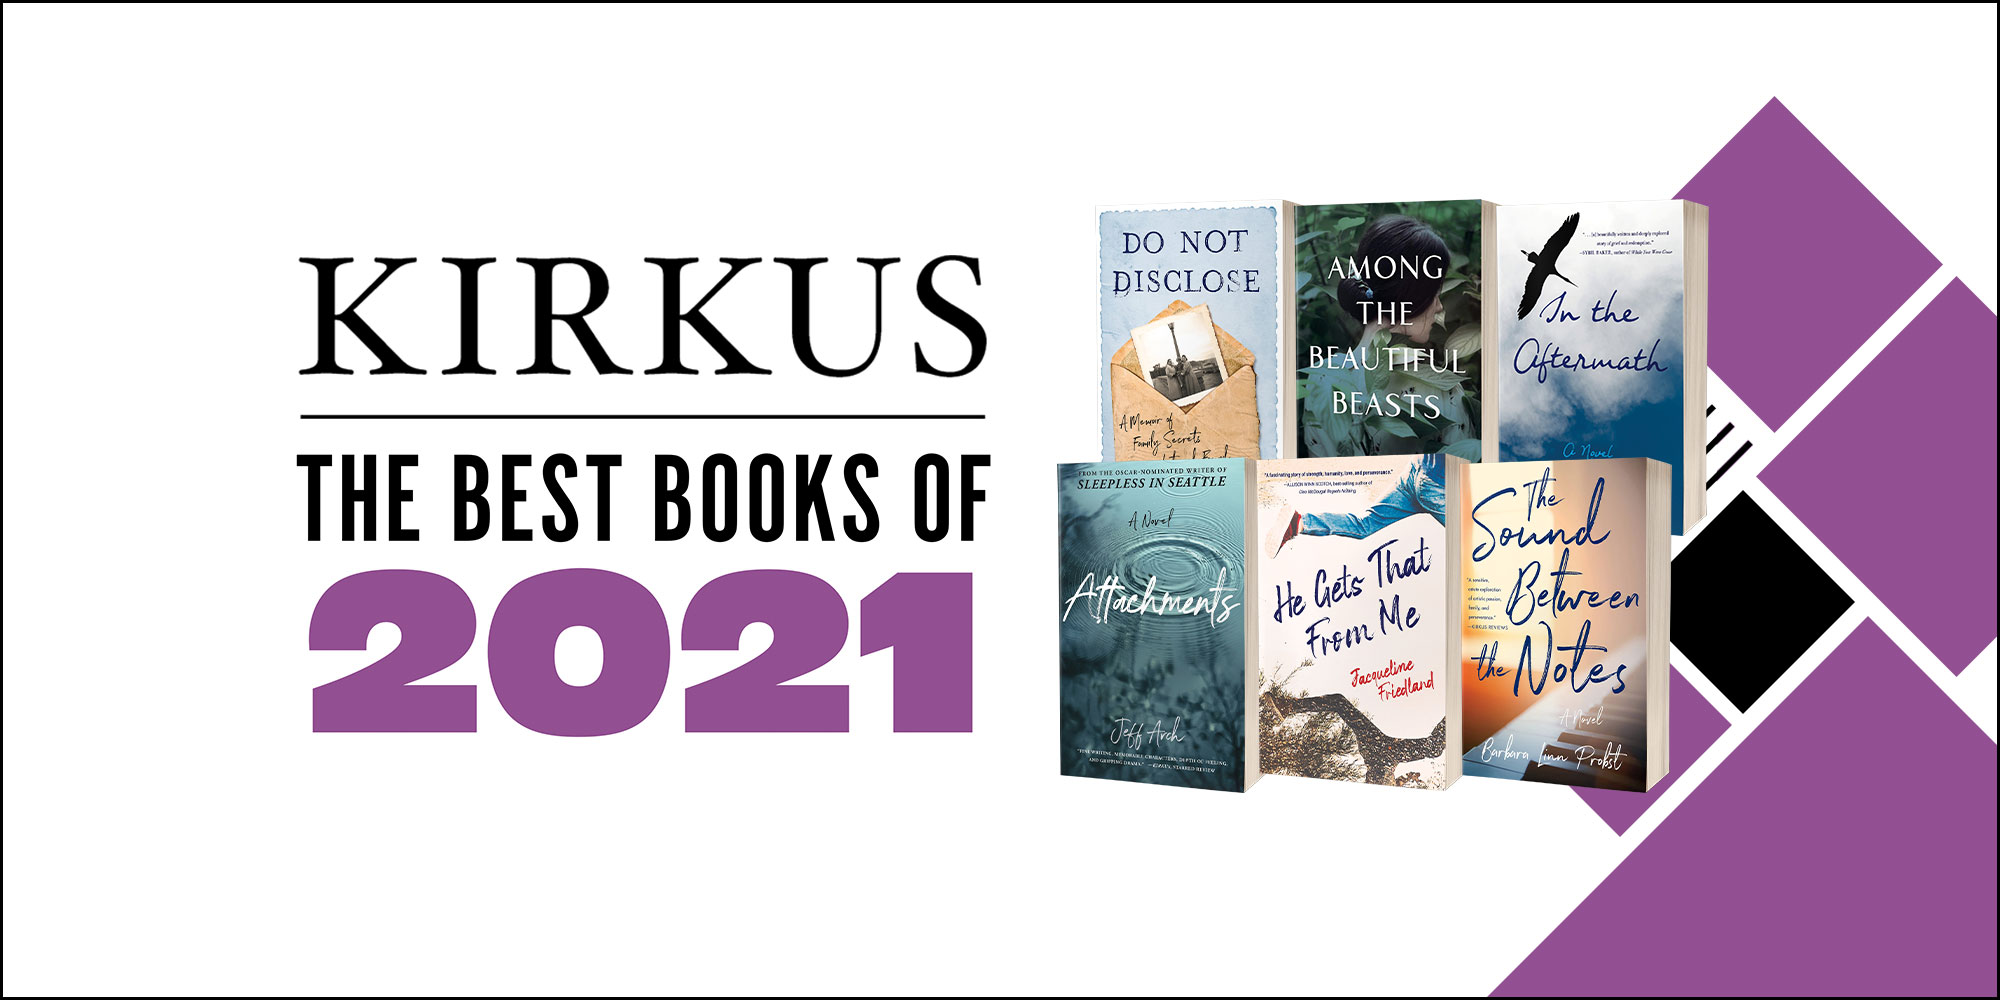 kirkus review best books 2021